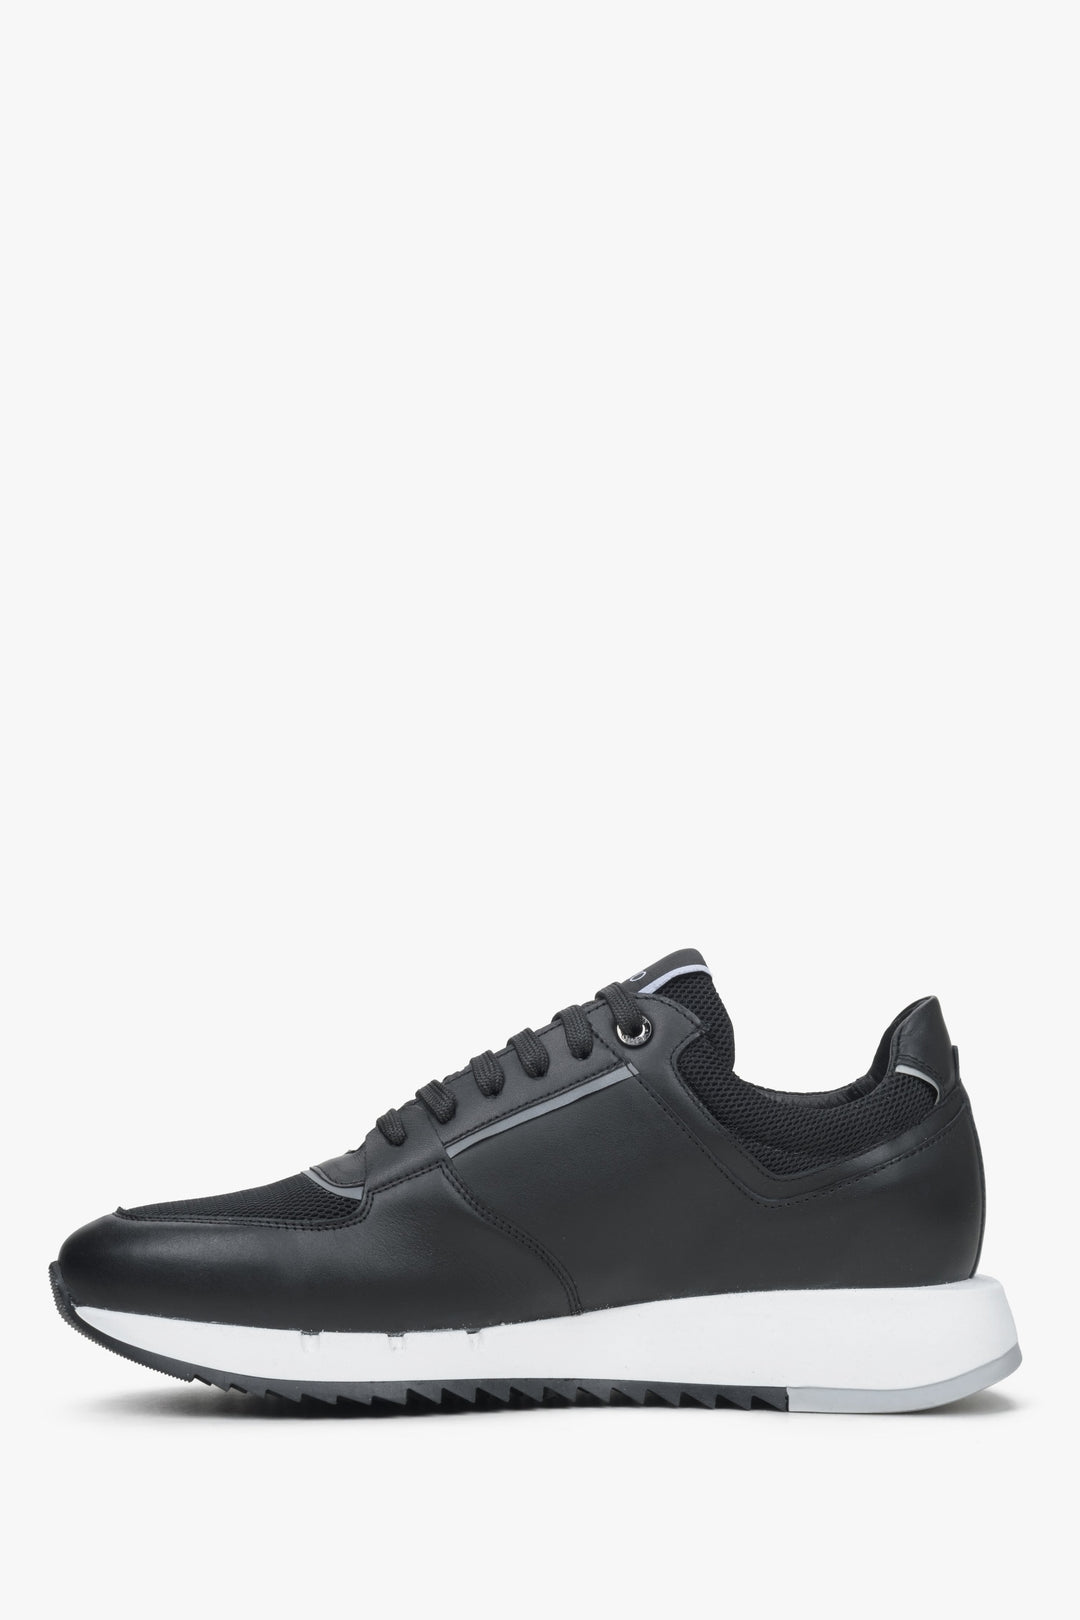 Comfortable men's black sneakers by Estro - shoe profile.